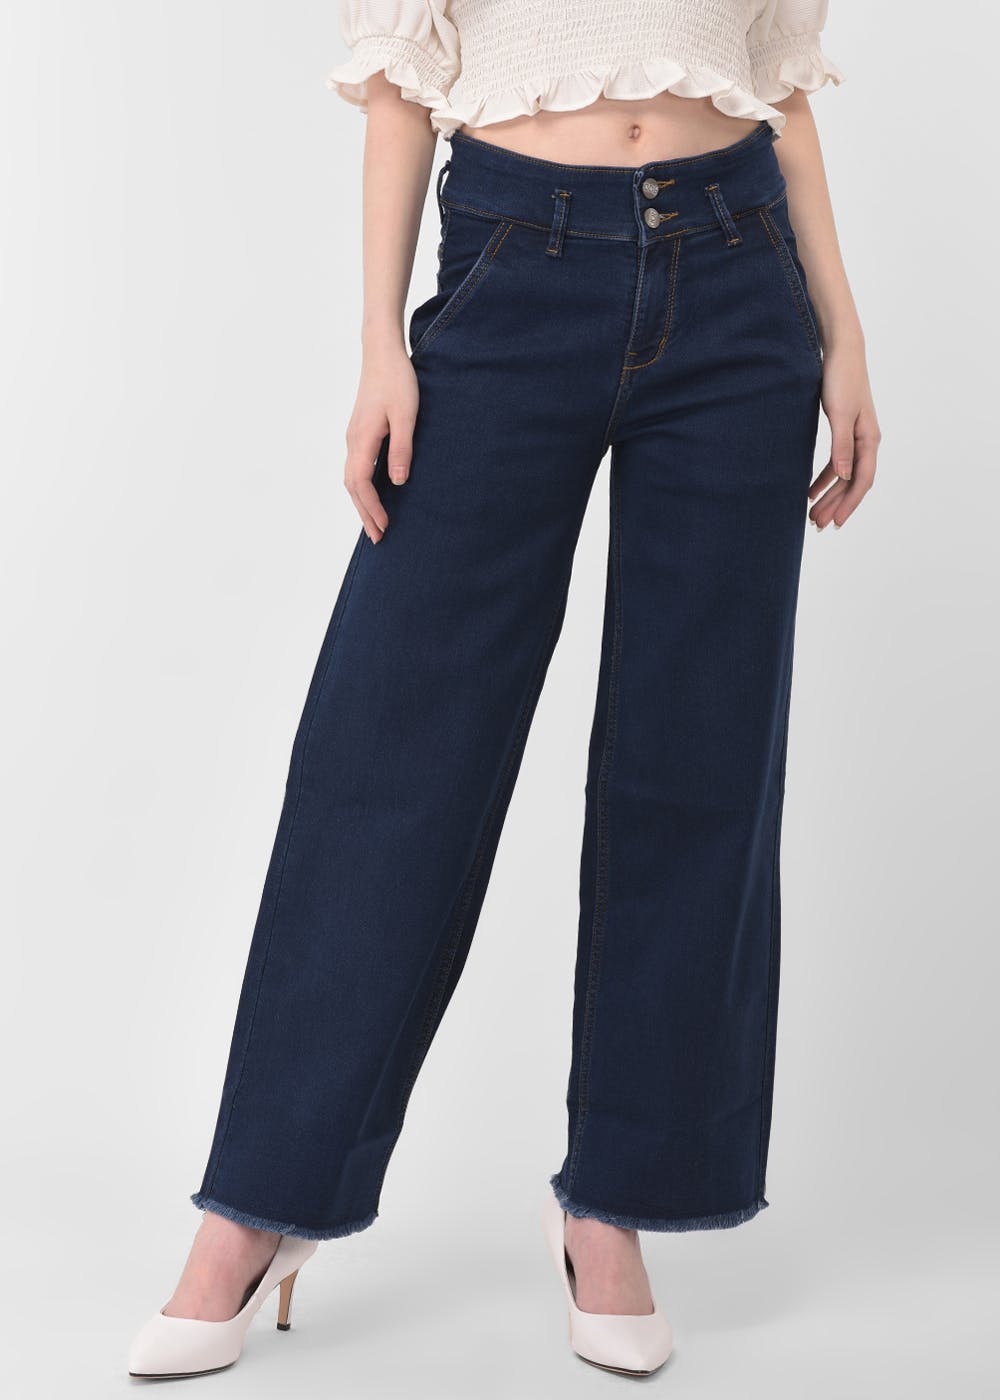 Buy Women Blue Wide Leg Jeans Online at Sassafras